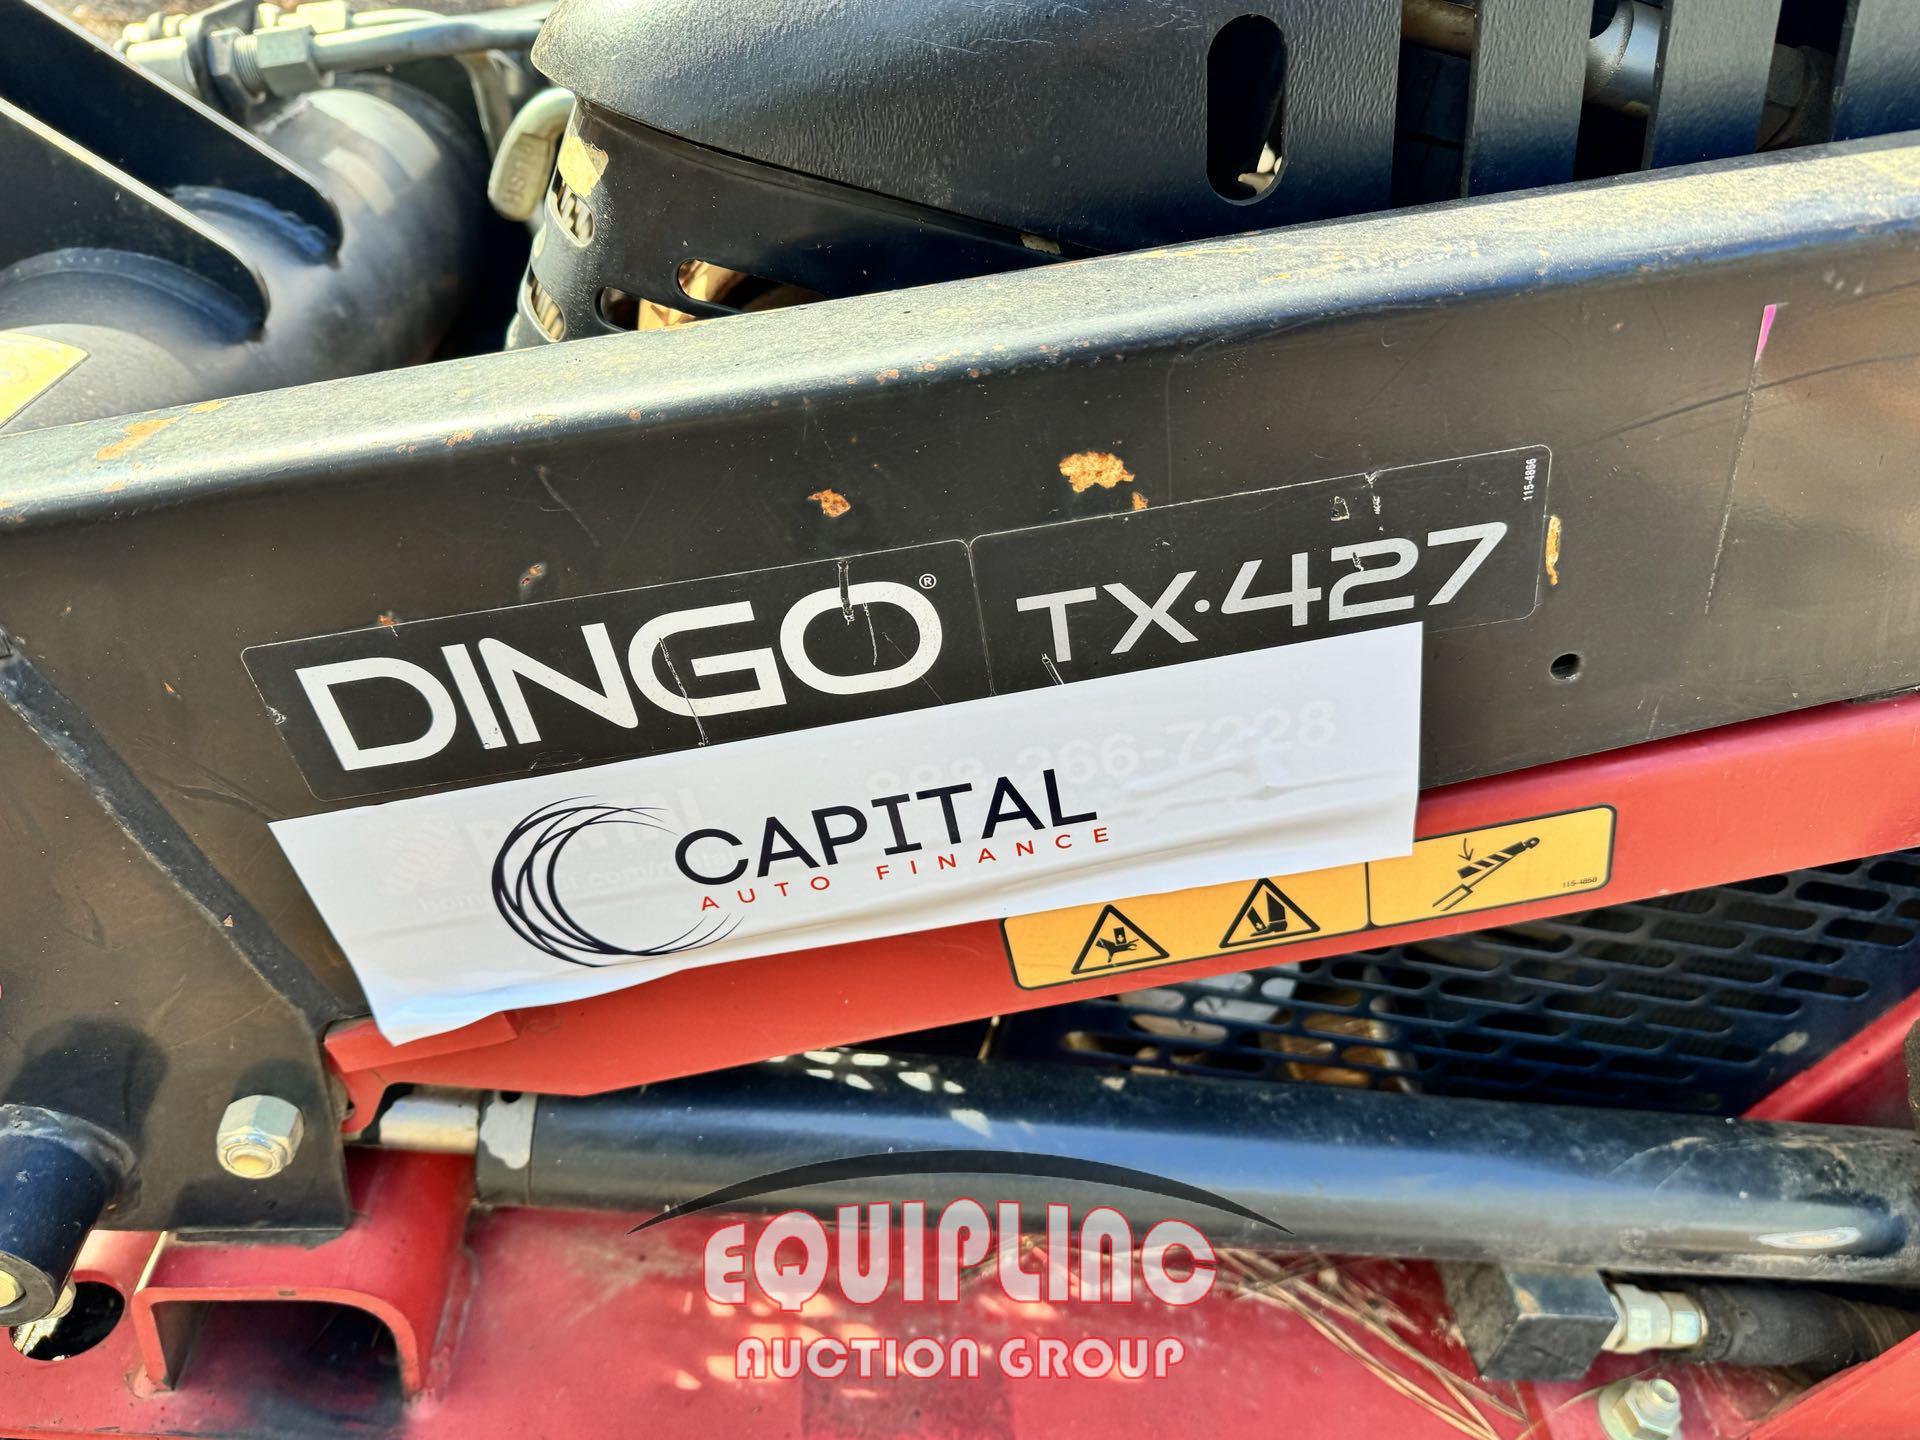 2016 TORO DINGO TX-427 NARROW TRACK COMPACT UTILITY LOADER